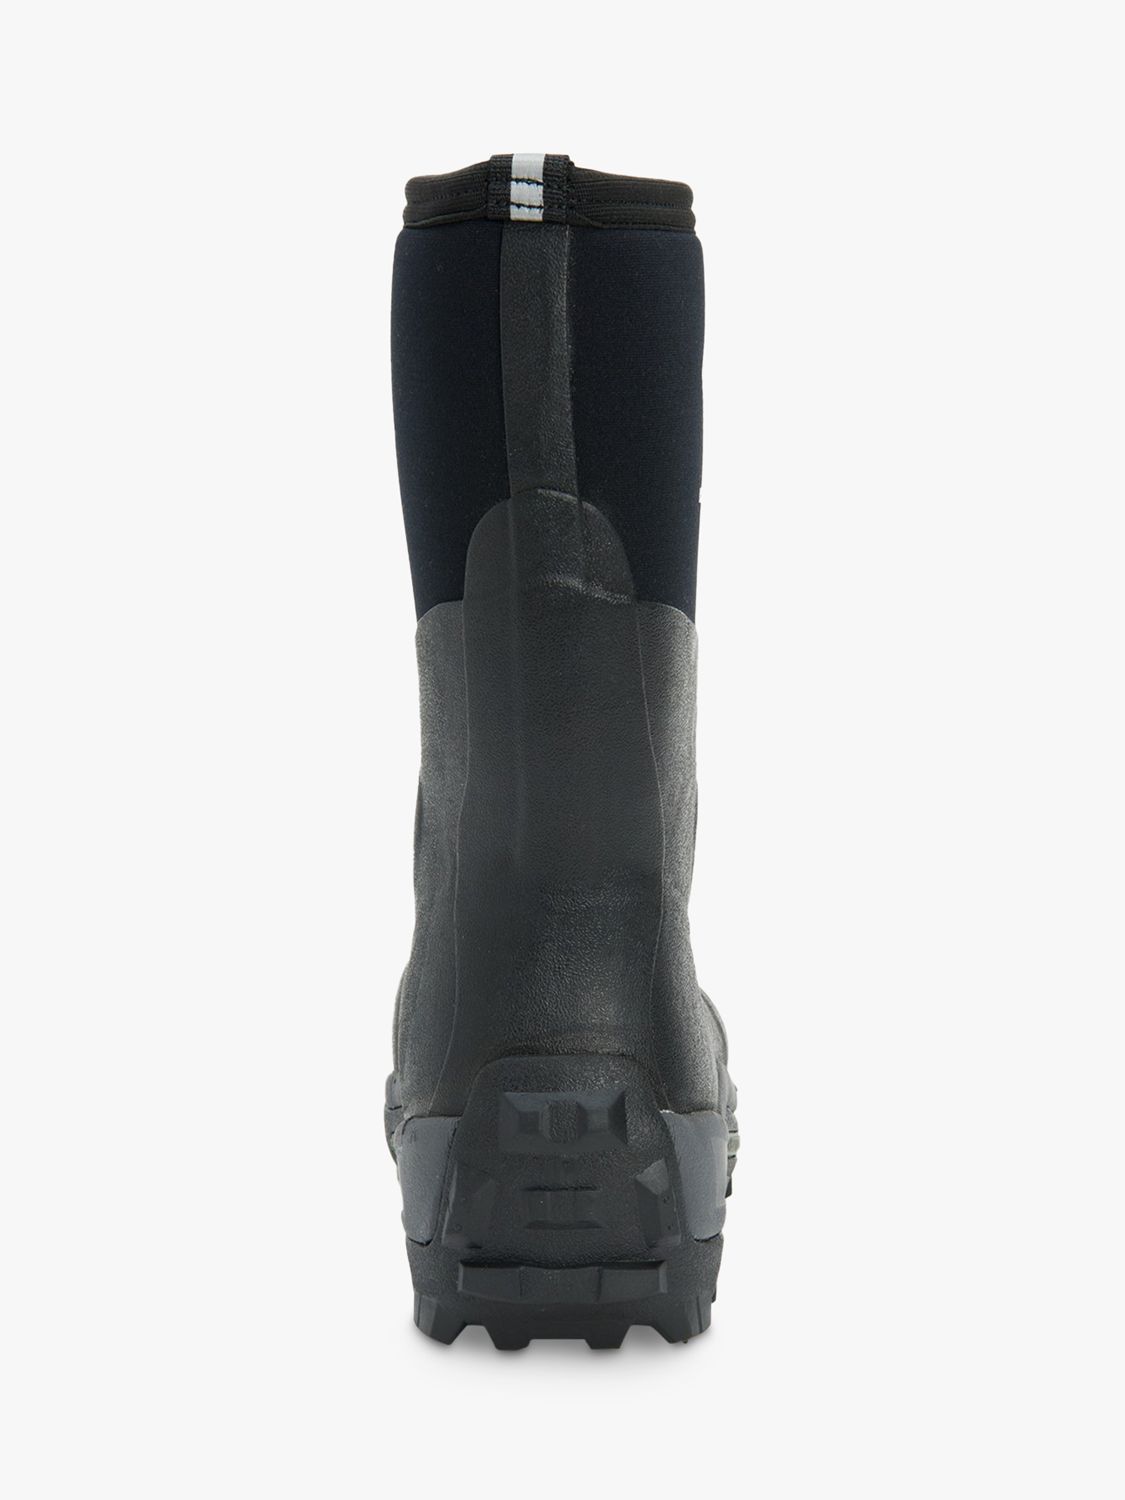 Muck Arctic Sport Pull On Short Wellington Boots, Black, 4